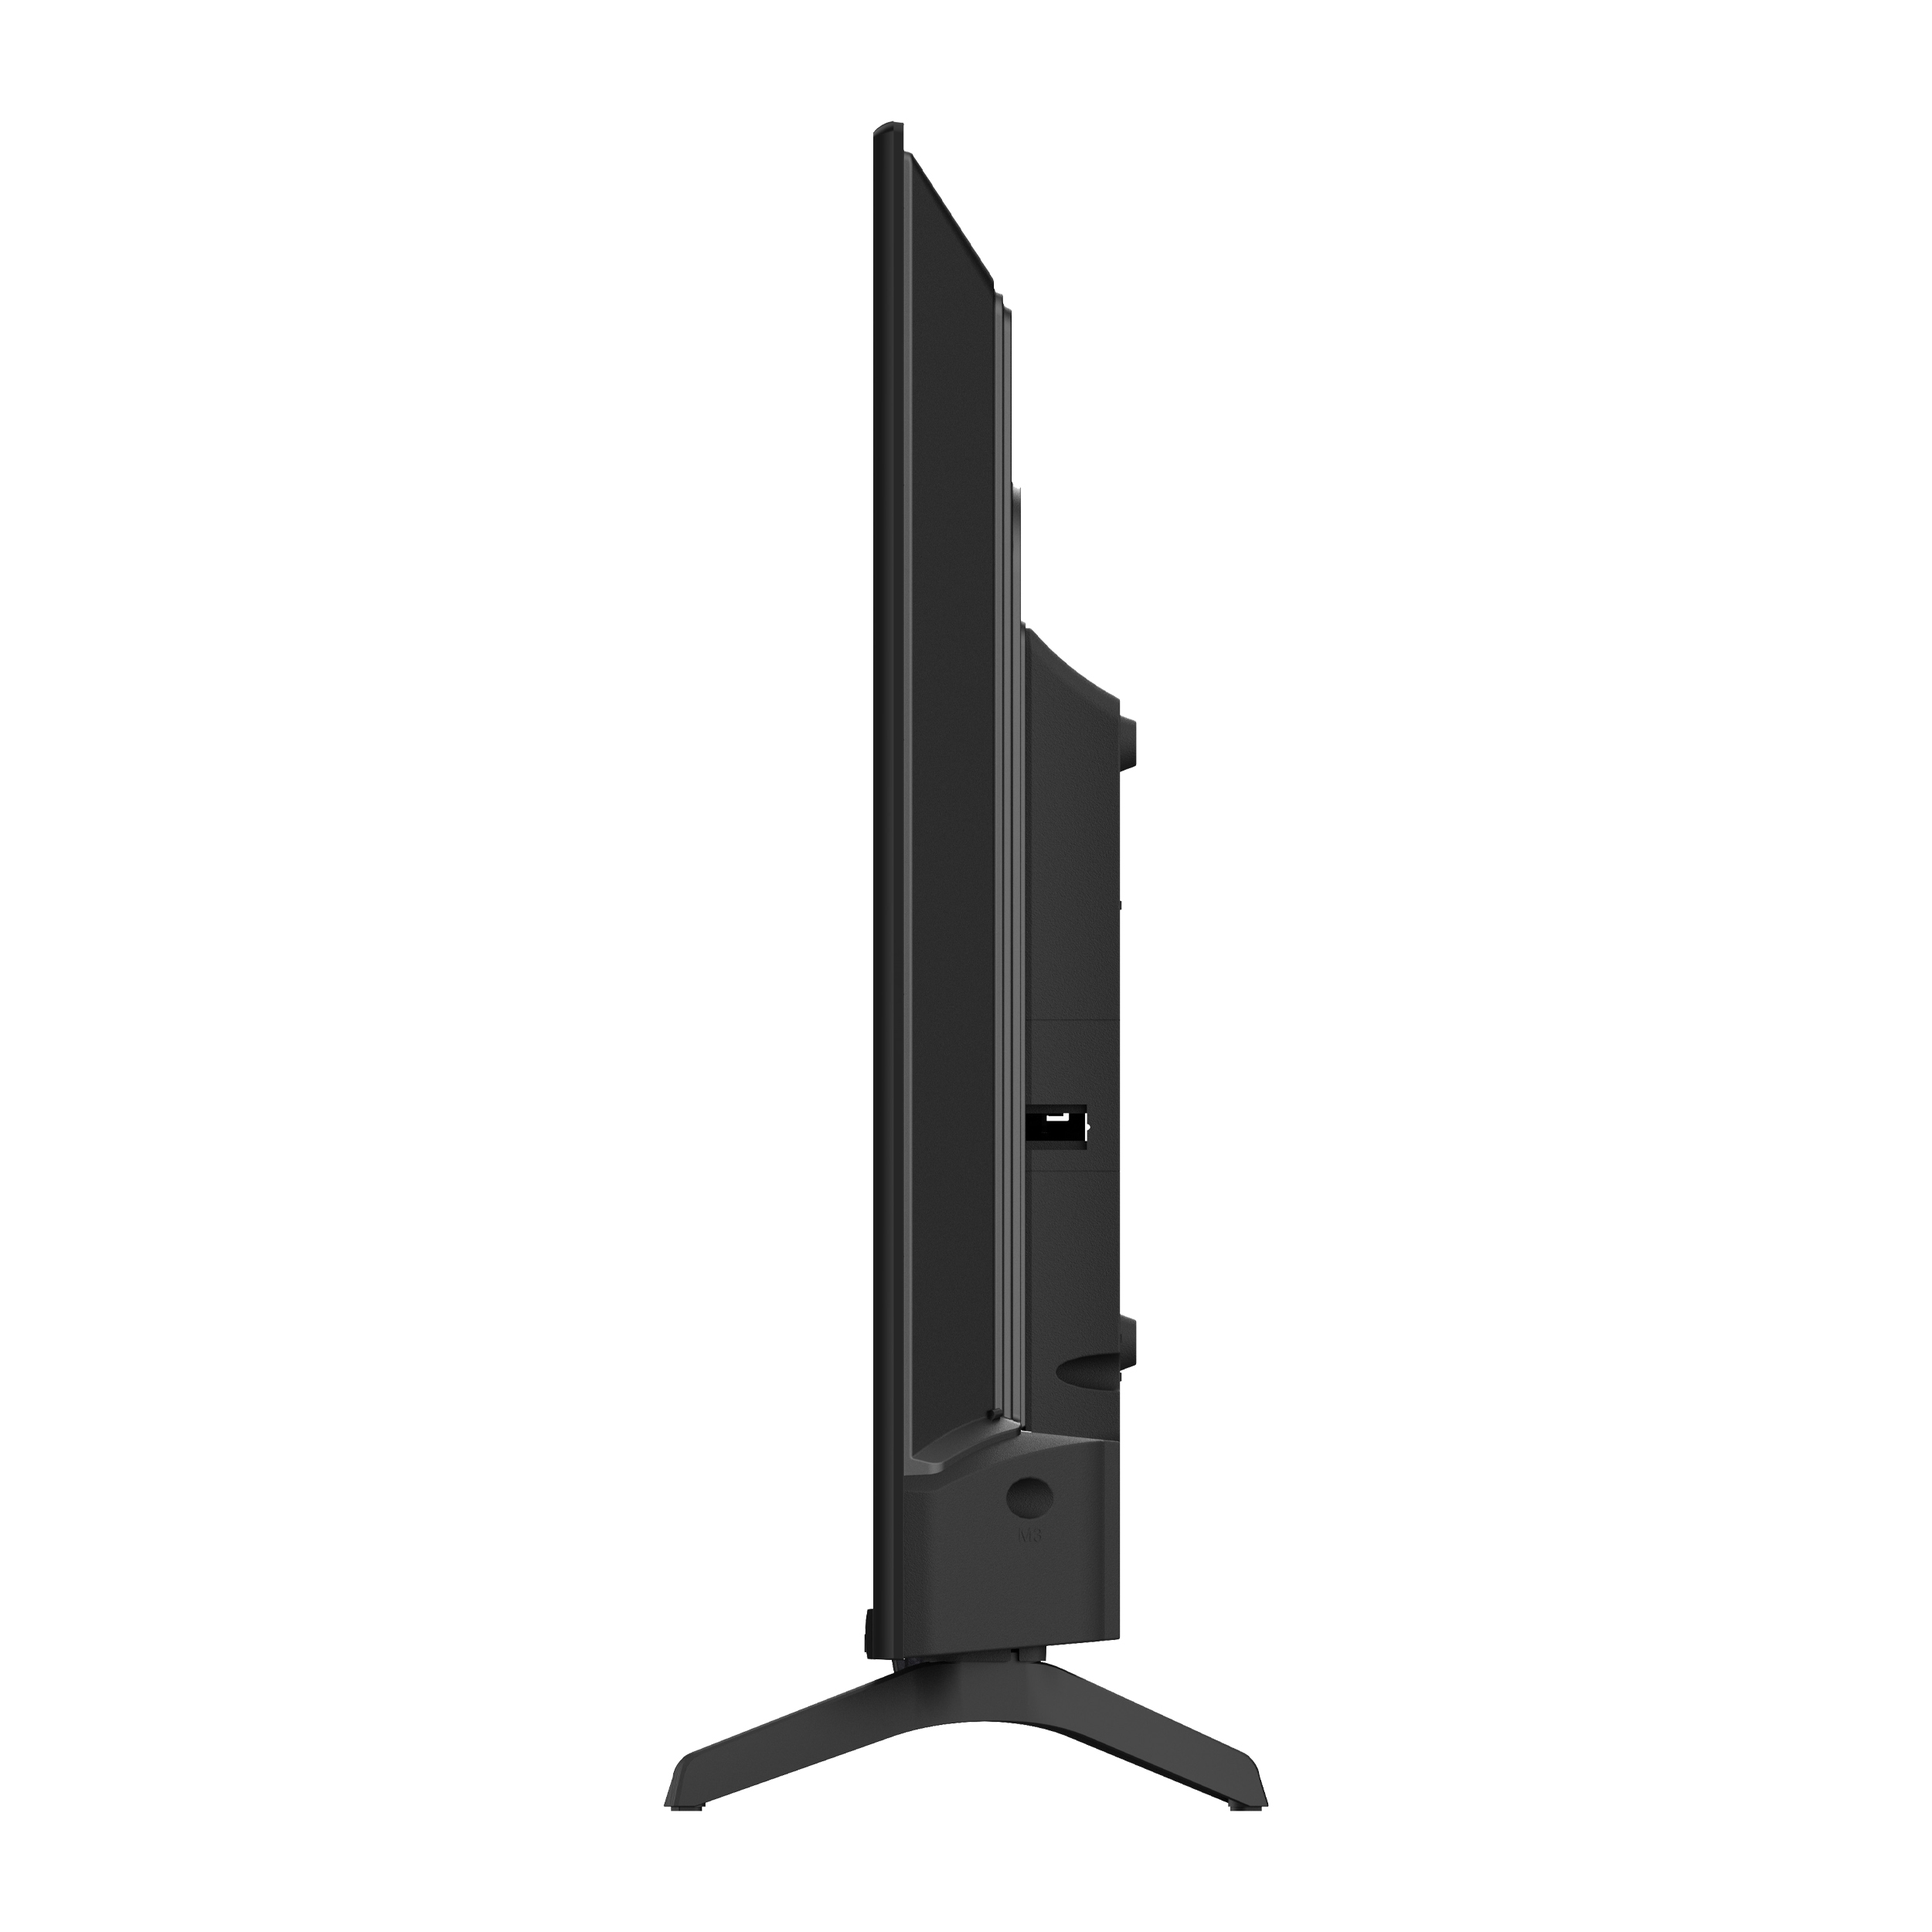 Smart LED TV G Plus model GTV-40RH614N size 40 inches